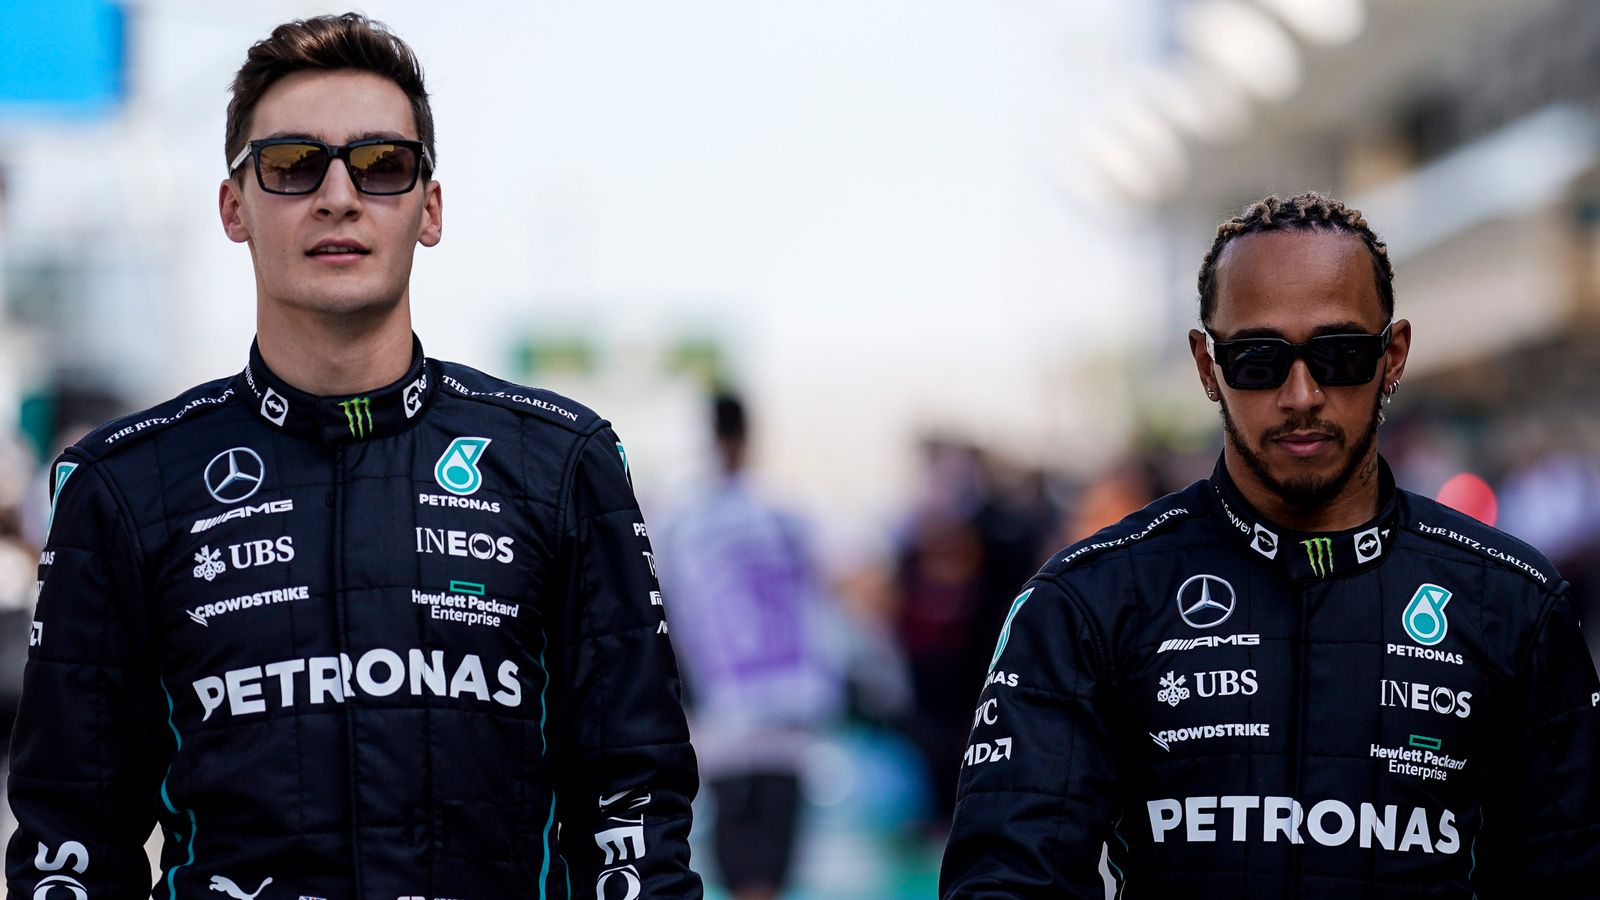 George Russell de Mercedes ha sido ‘fenomenal’;  Lewis Hamilton ‘odia perder con sus compañeros’ – Nico Rosberg